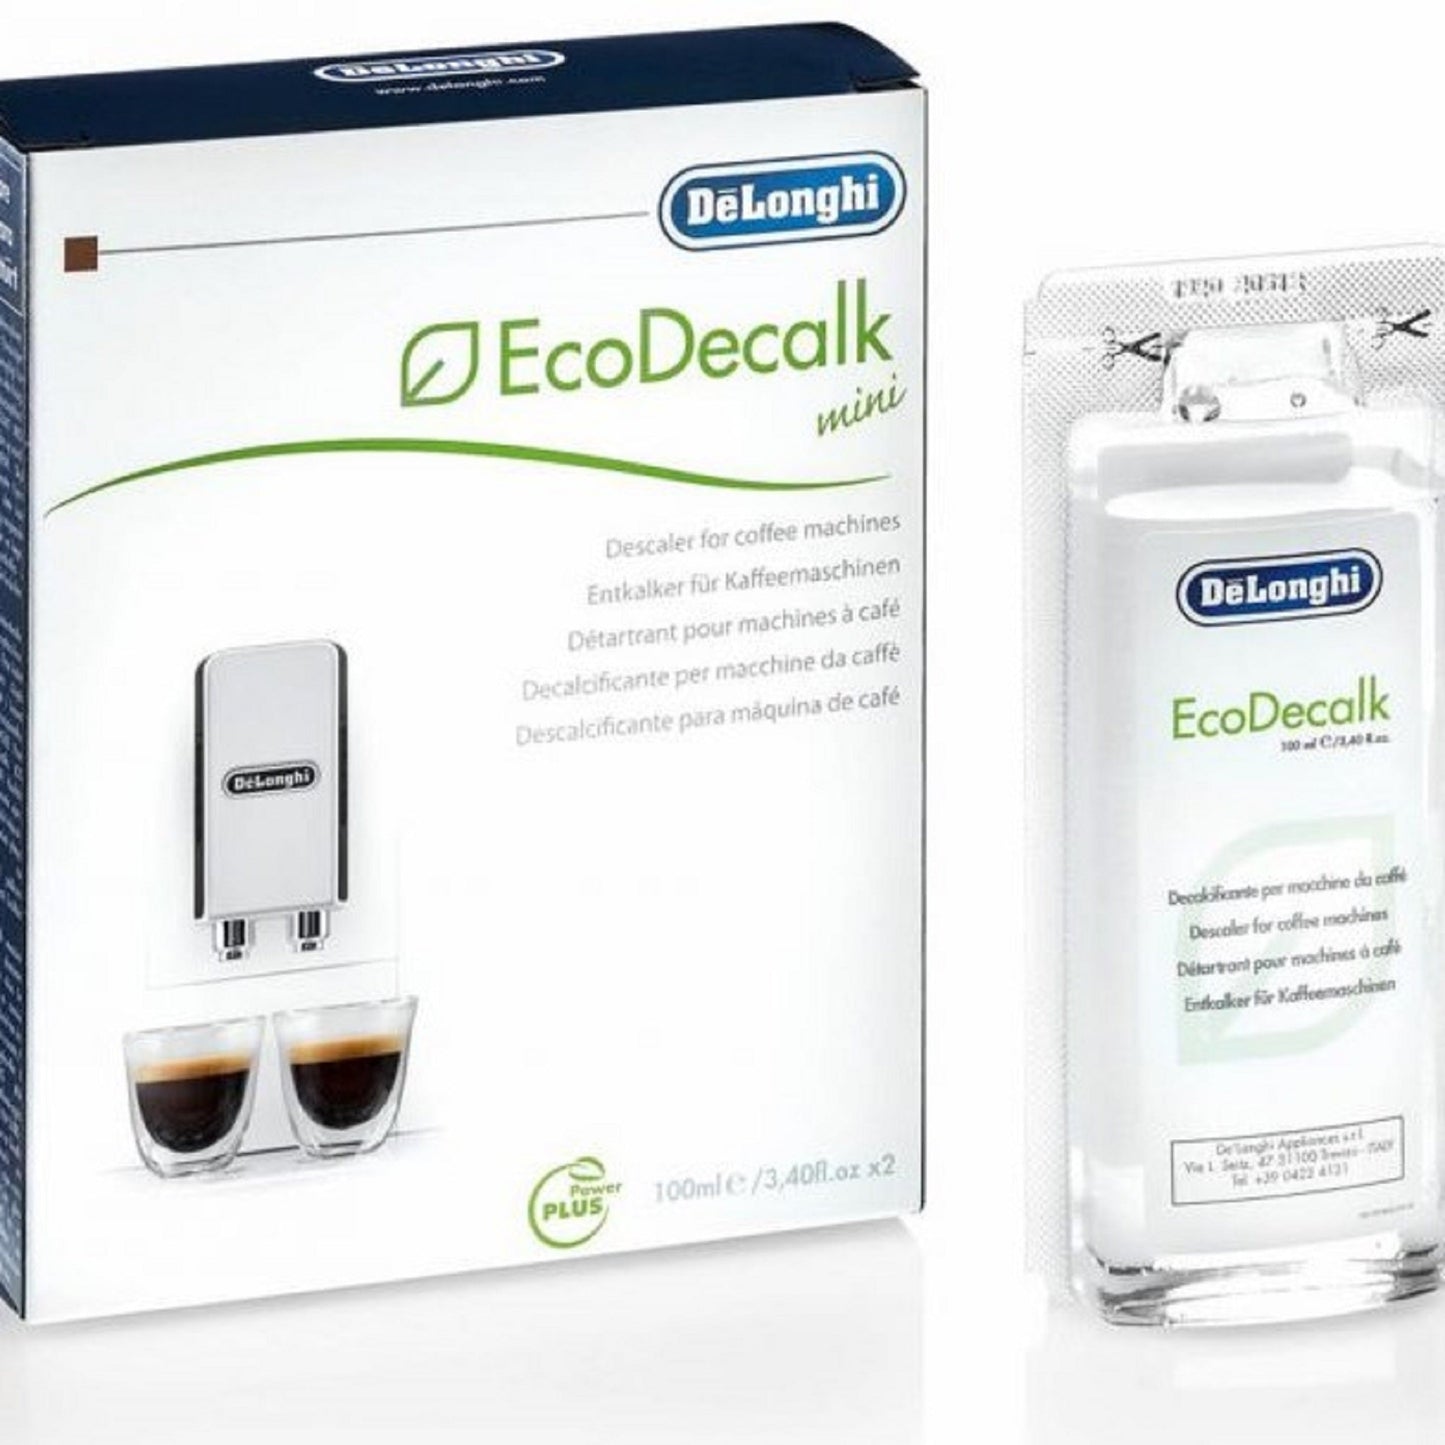 DeLonghi Descalcificador Eco Decalk mini - solo 5,49 € para